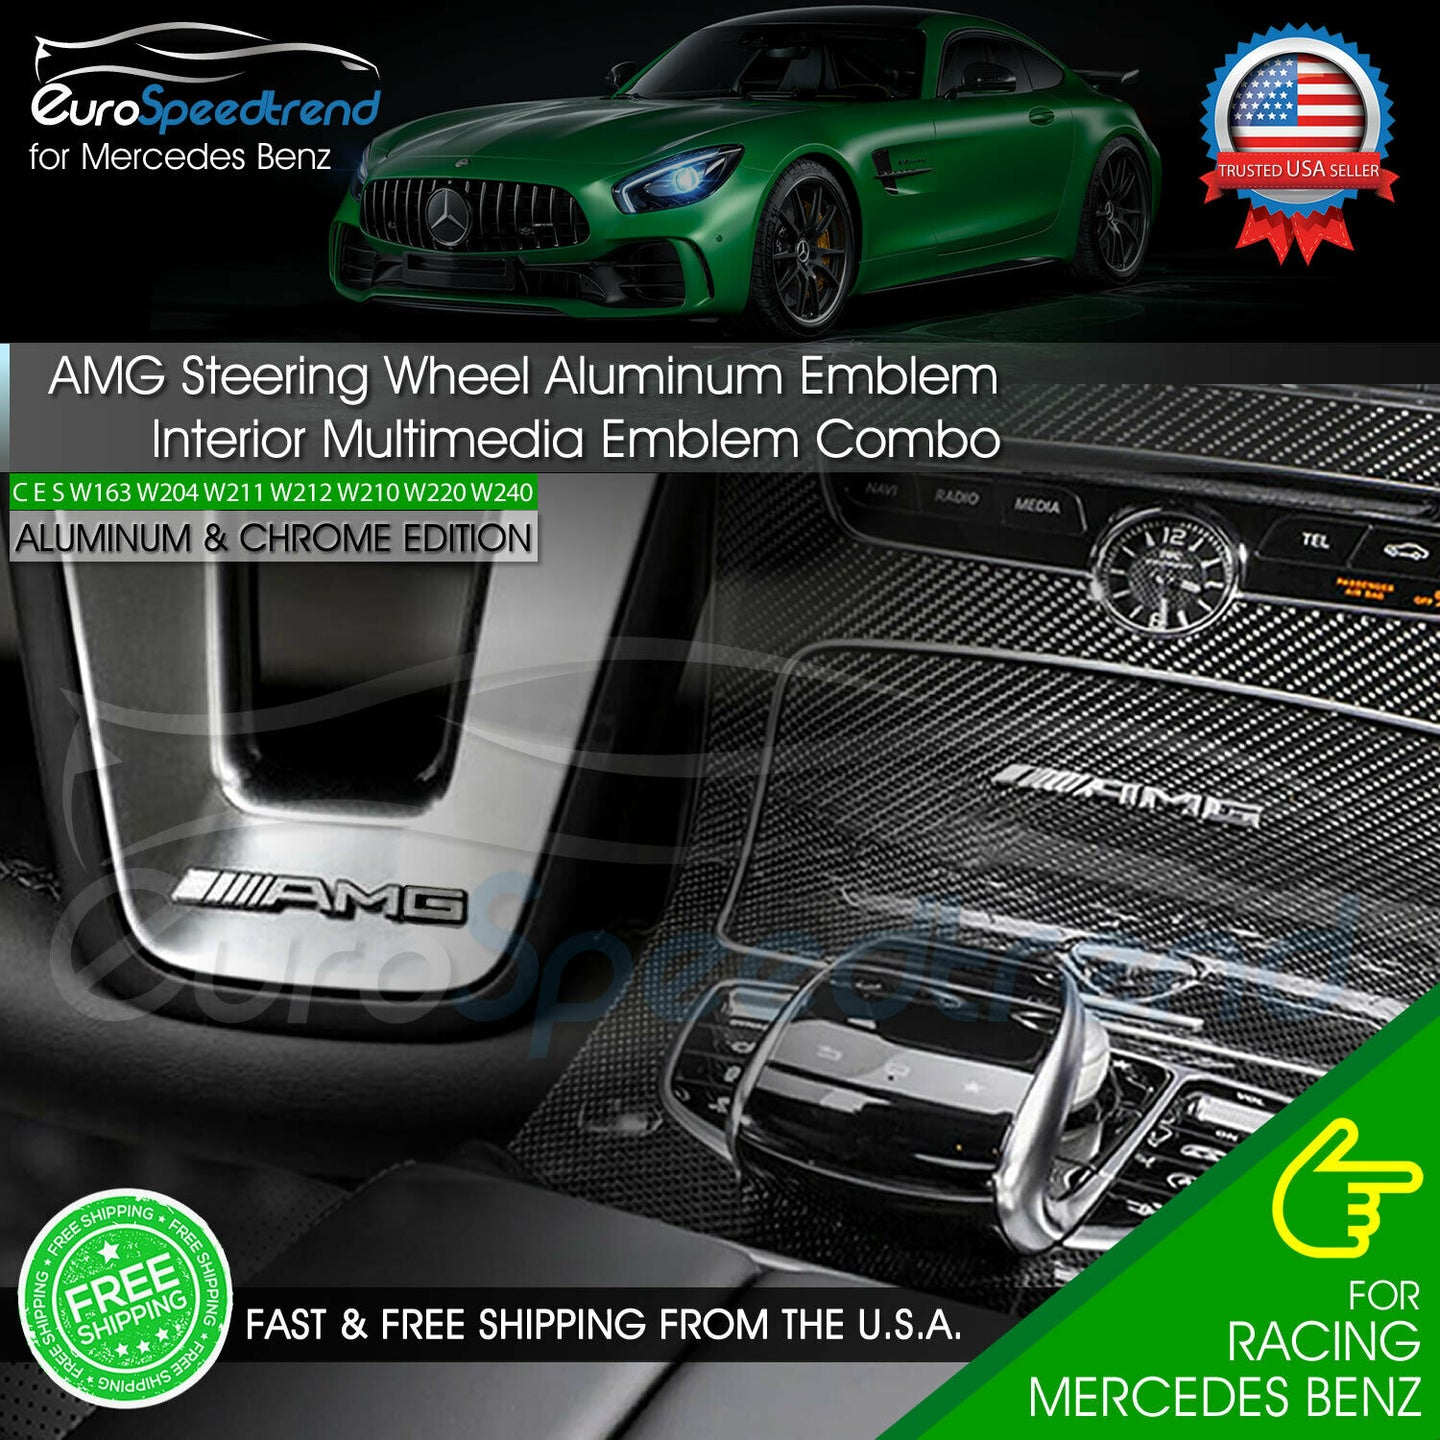 AMG Interior Emblem Multimedia Steering Wheel Combo Badge Mercedes Benz Chrome